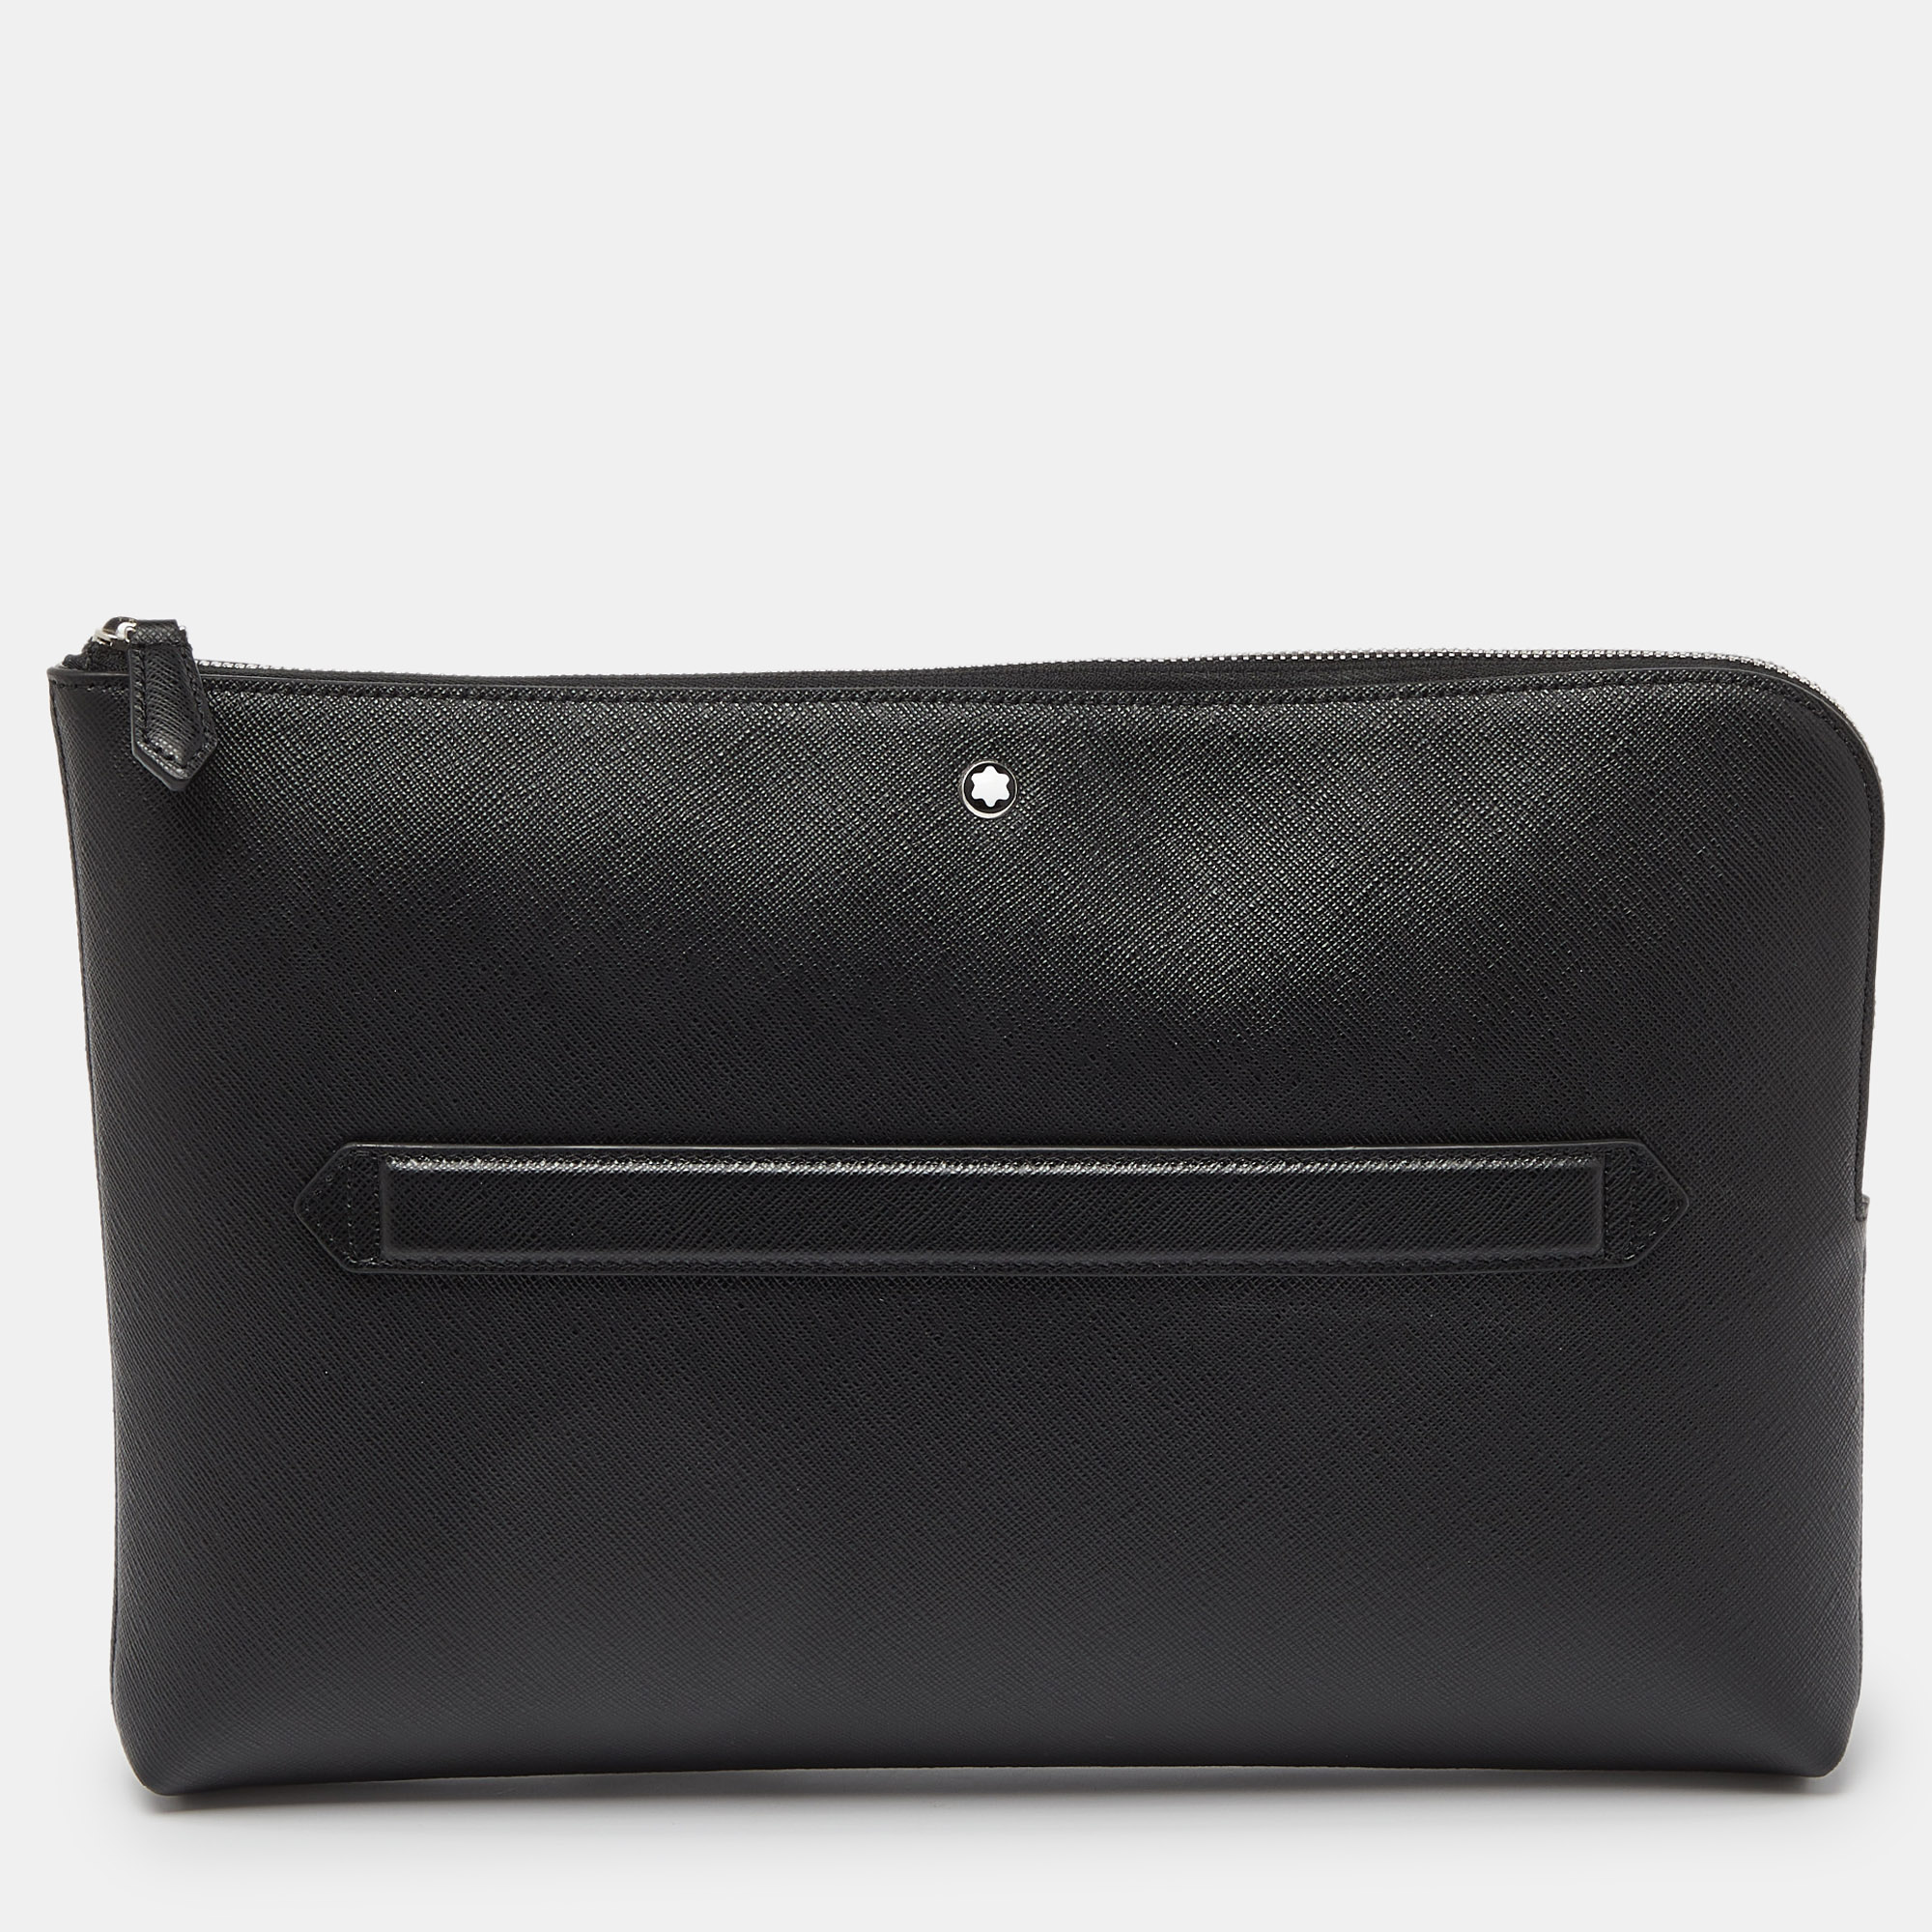 Montblanc black leather meisterstuck zip pouch